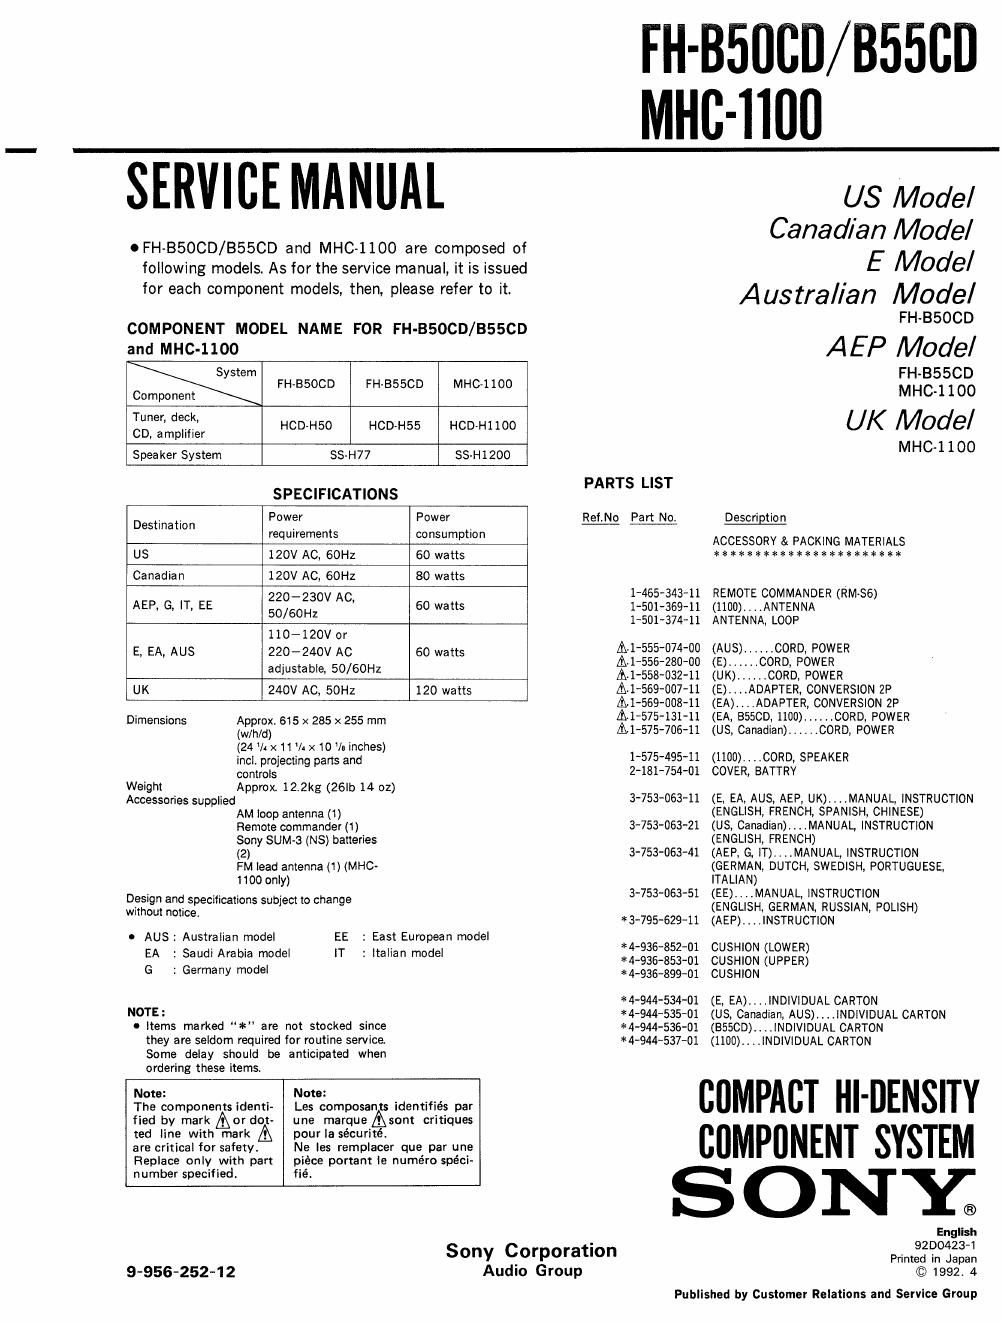 sony mhc 1100 service manual